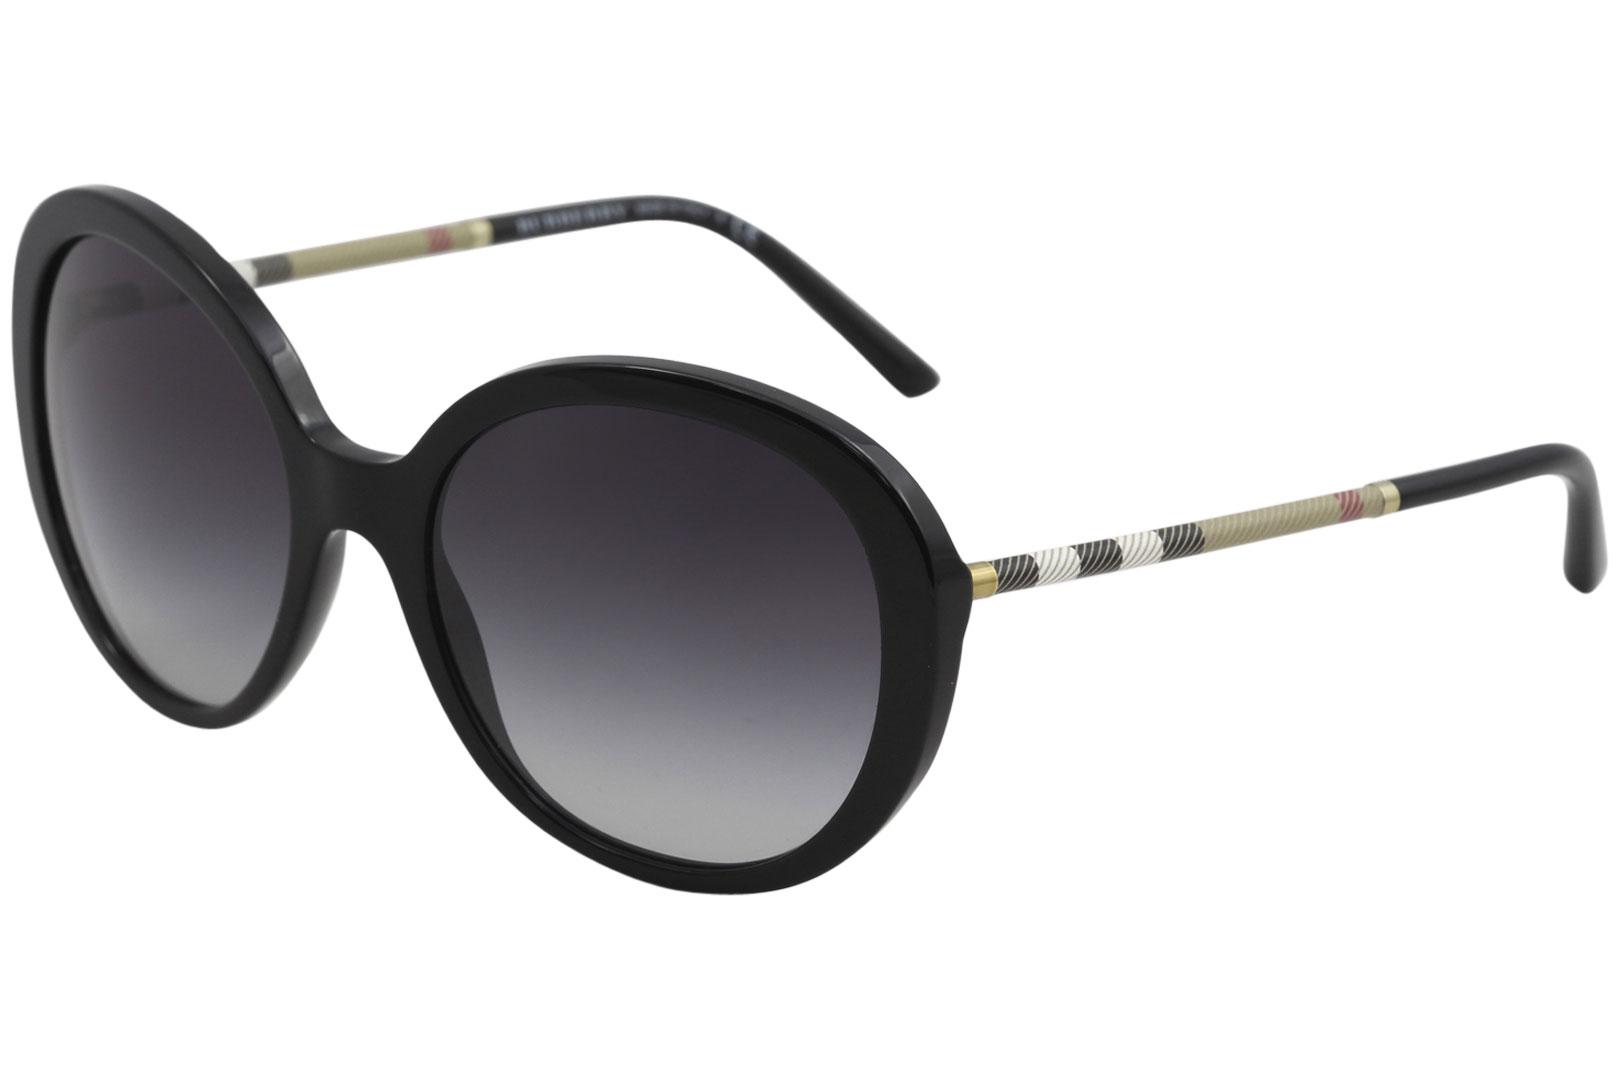 Burberry Women's BE4239Q BE/4239/Q Fashion Round Sunglasses - Black/Grey Gradient   3001/8G - Lens 57 Bridge 19 Temple 140mm